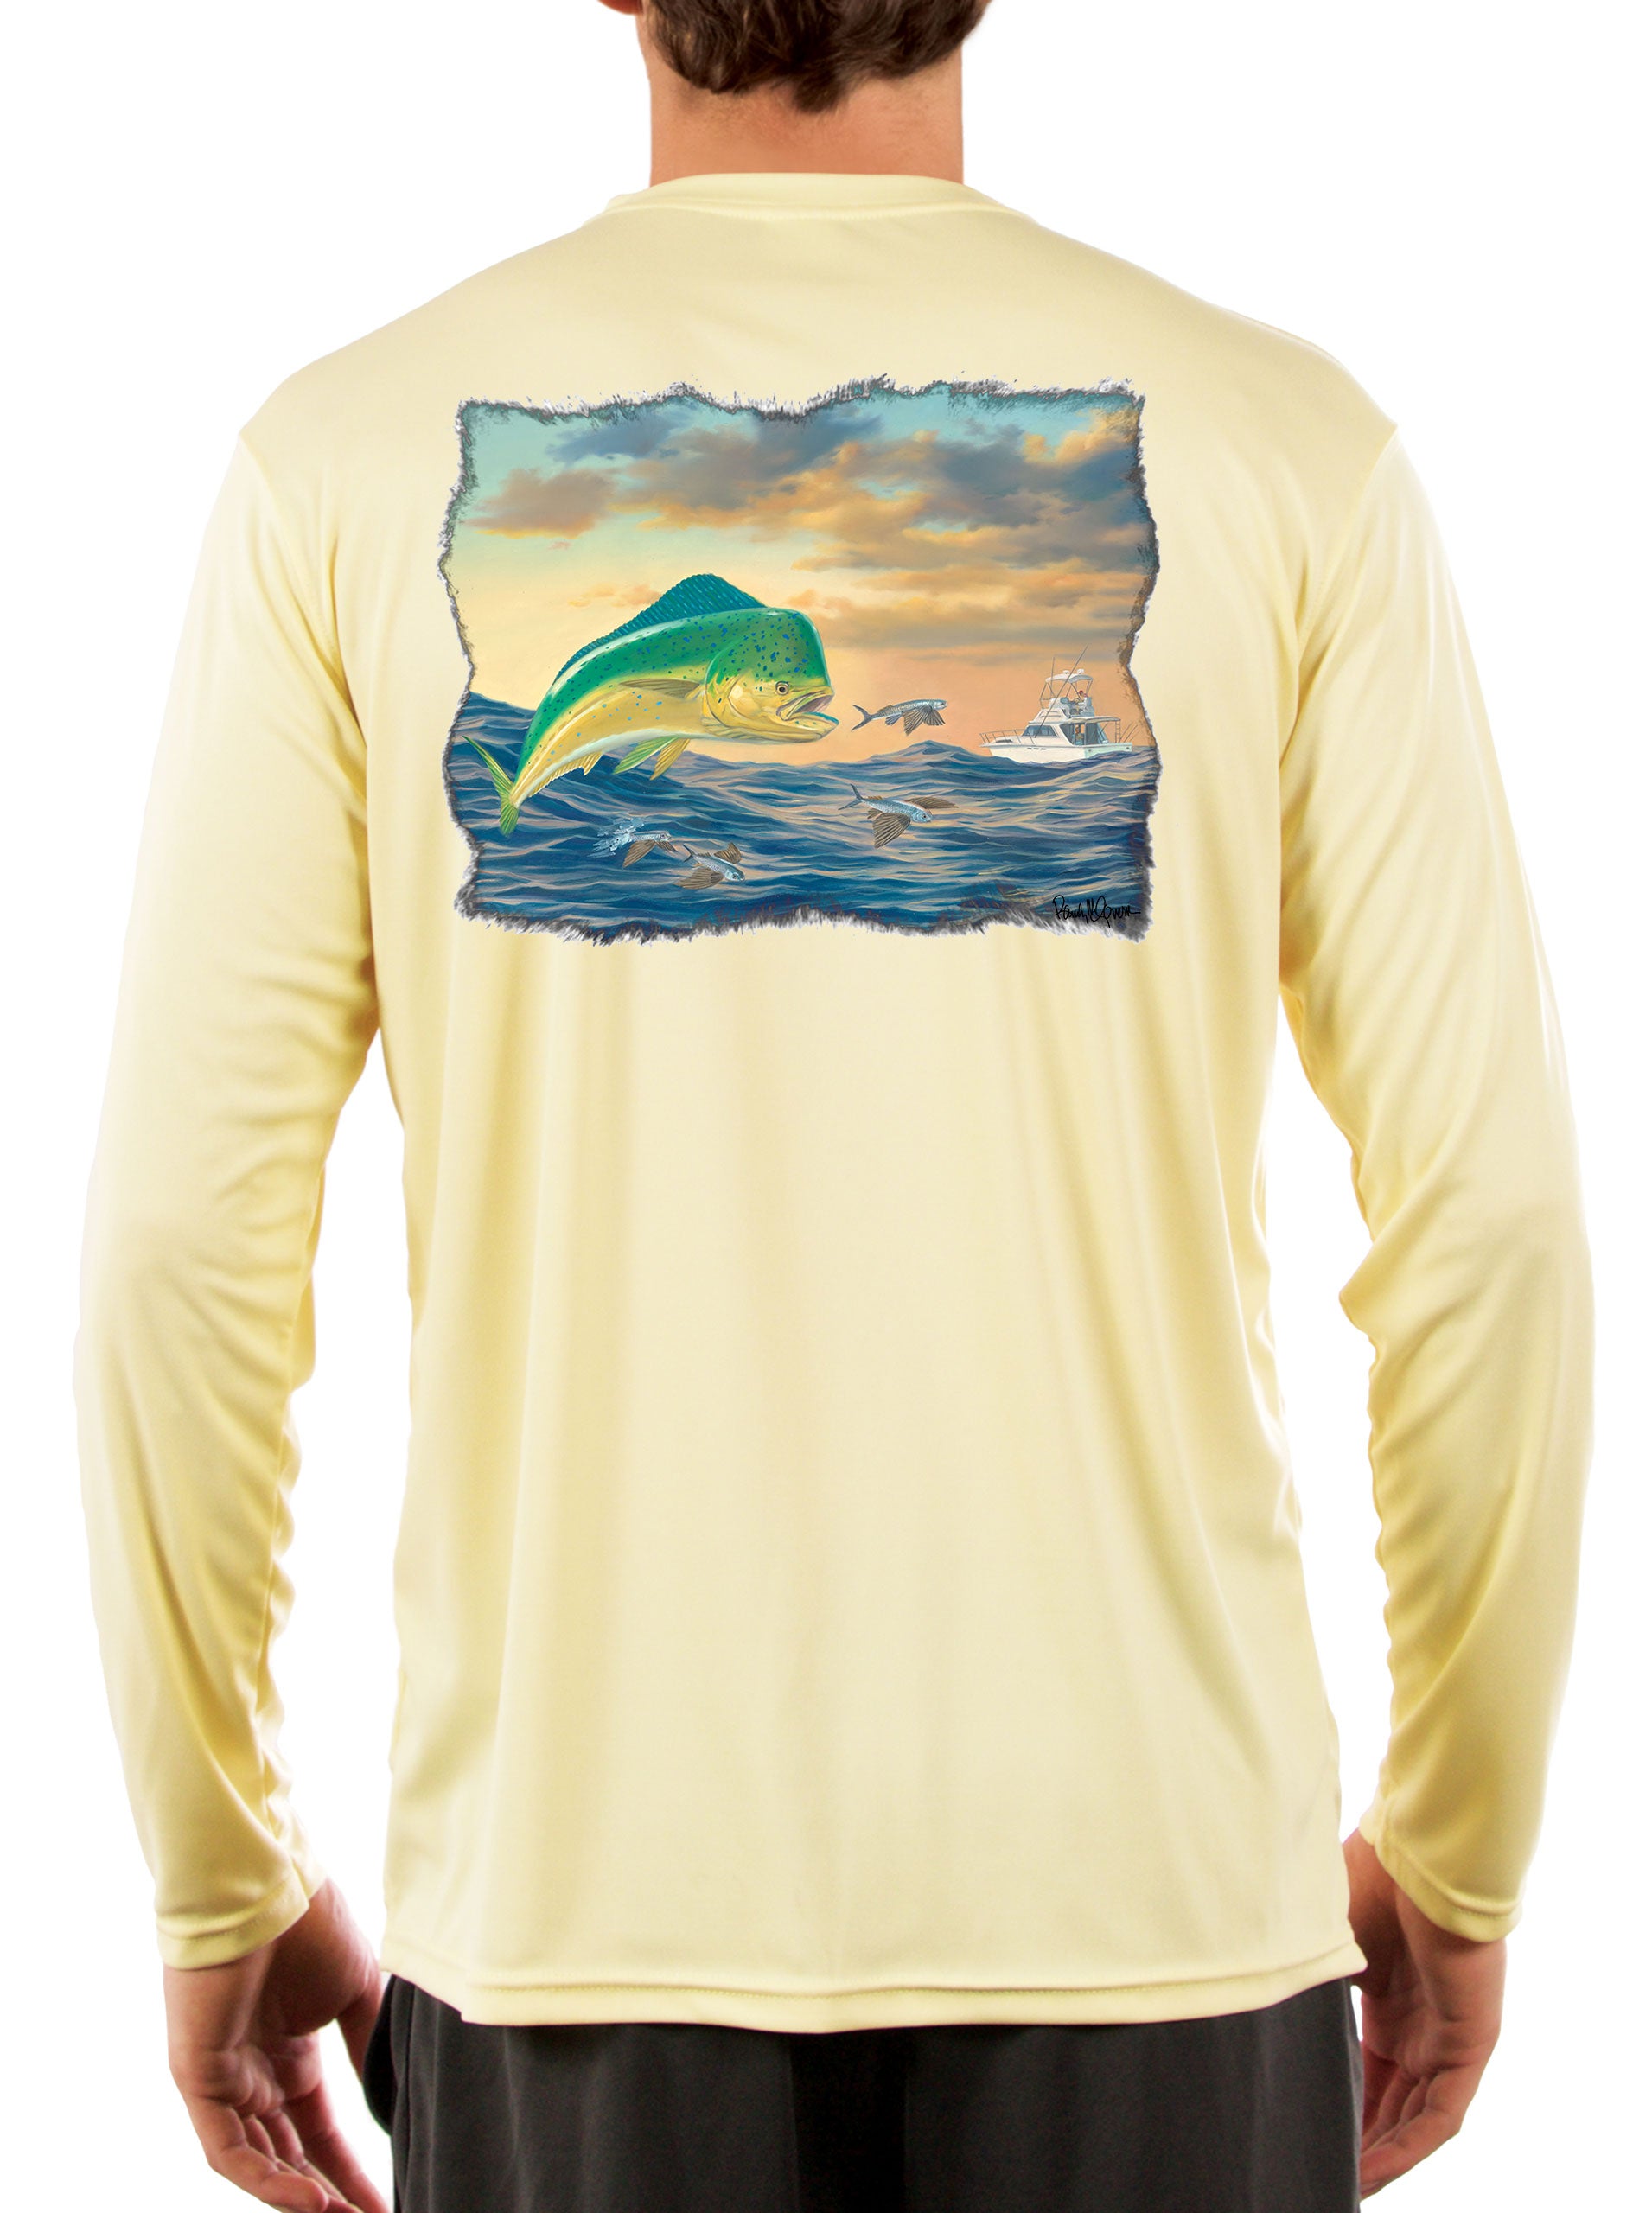 Mahi-mahi with Flying Fish Fishing Shirts for Men Featuring Dorado / Dolphinfish Art by Randy McGovern 2XL / Yellow